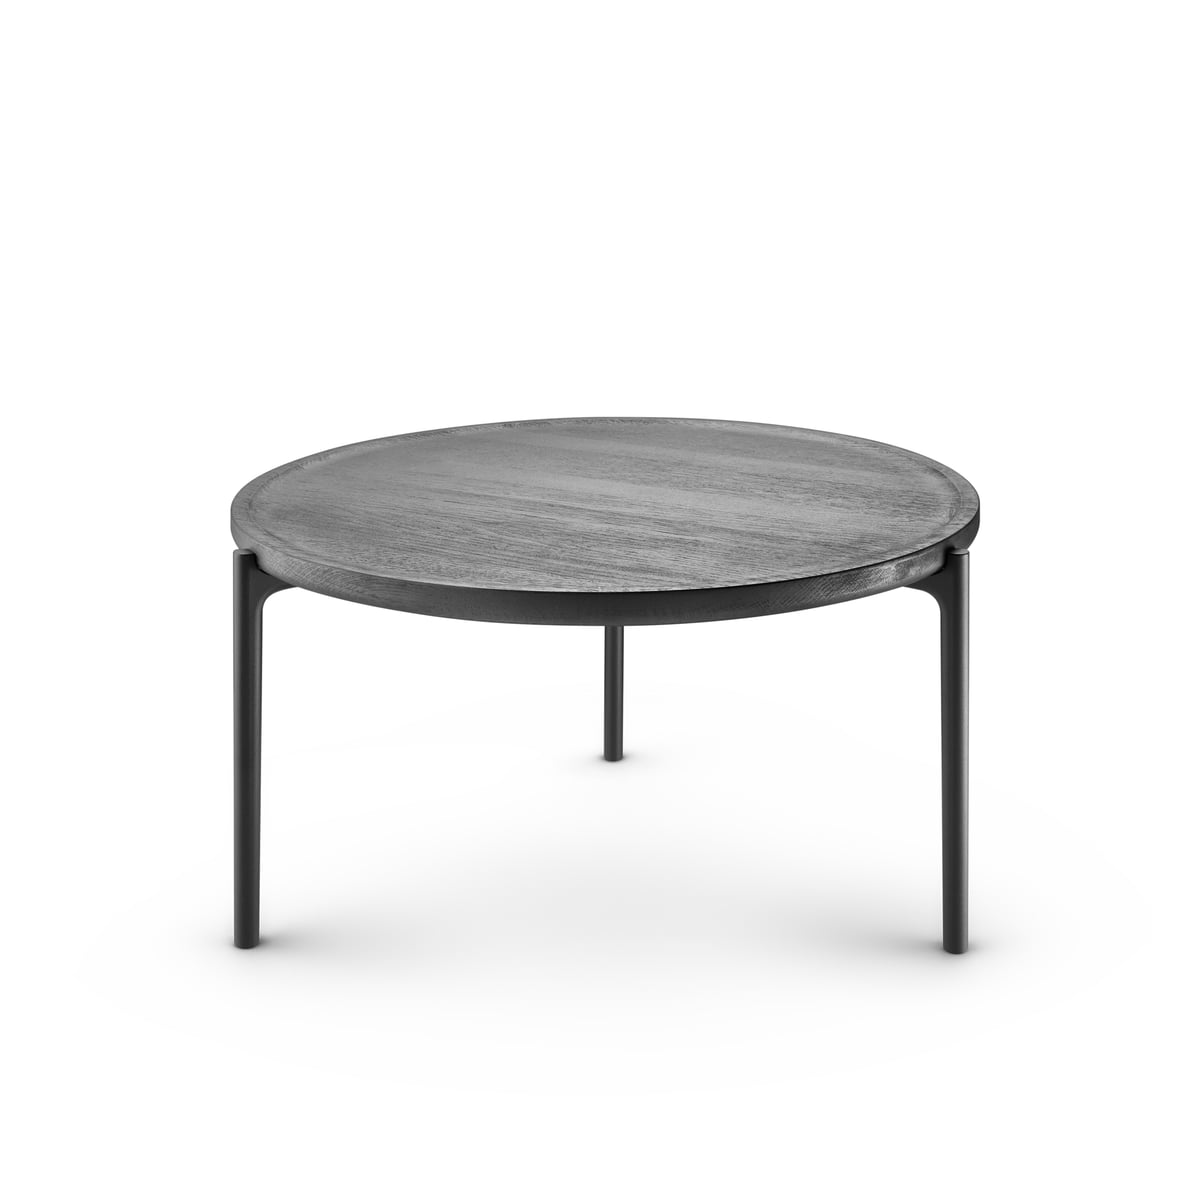 Eva Solo Savoye Round Coffee Table | Panik Design